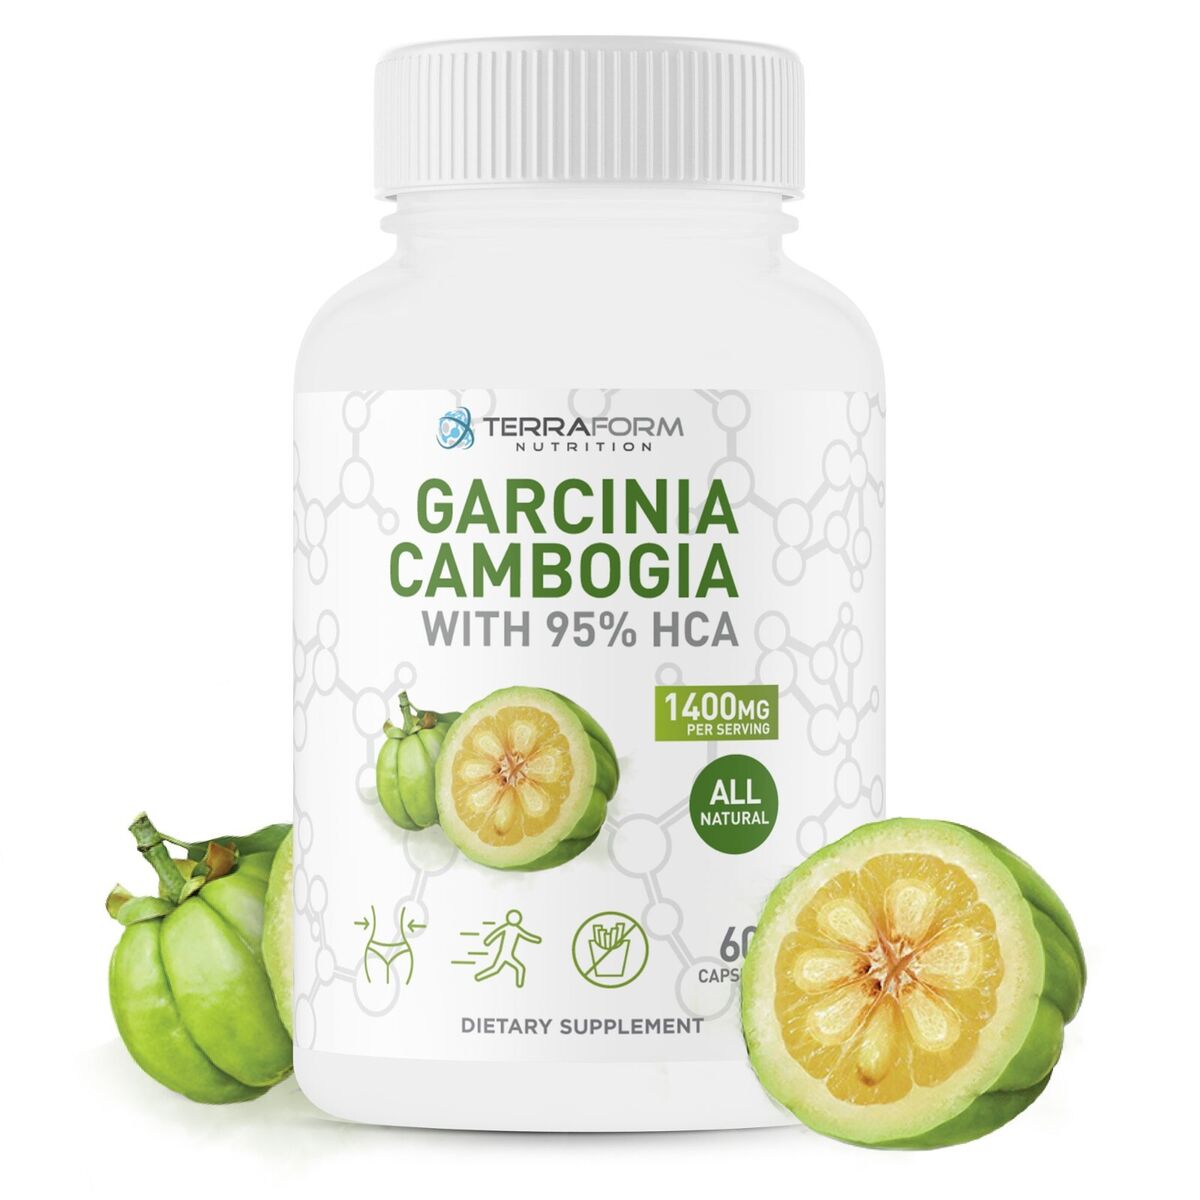 Garcinia cambogia extract